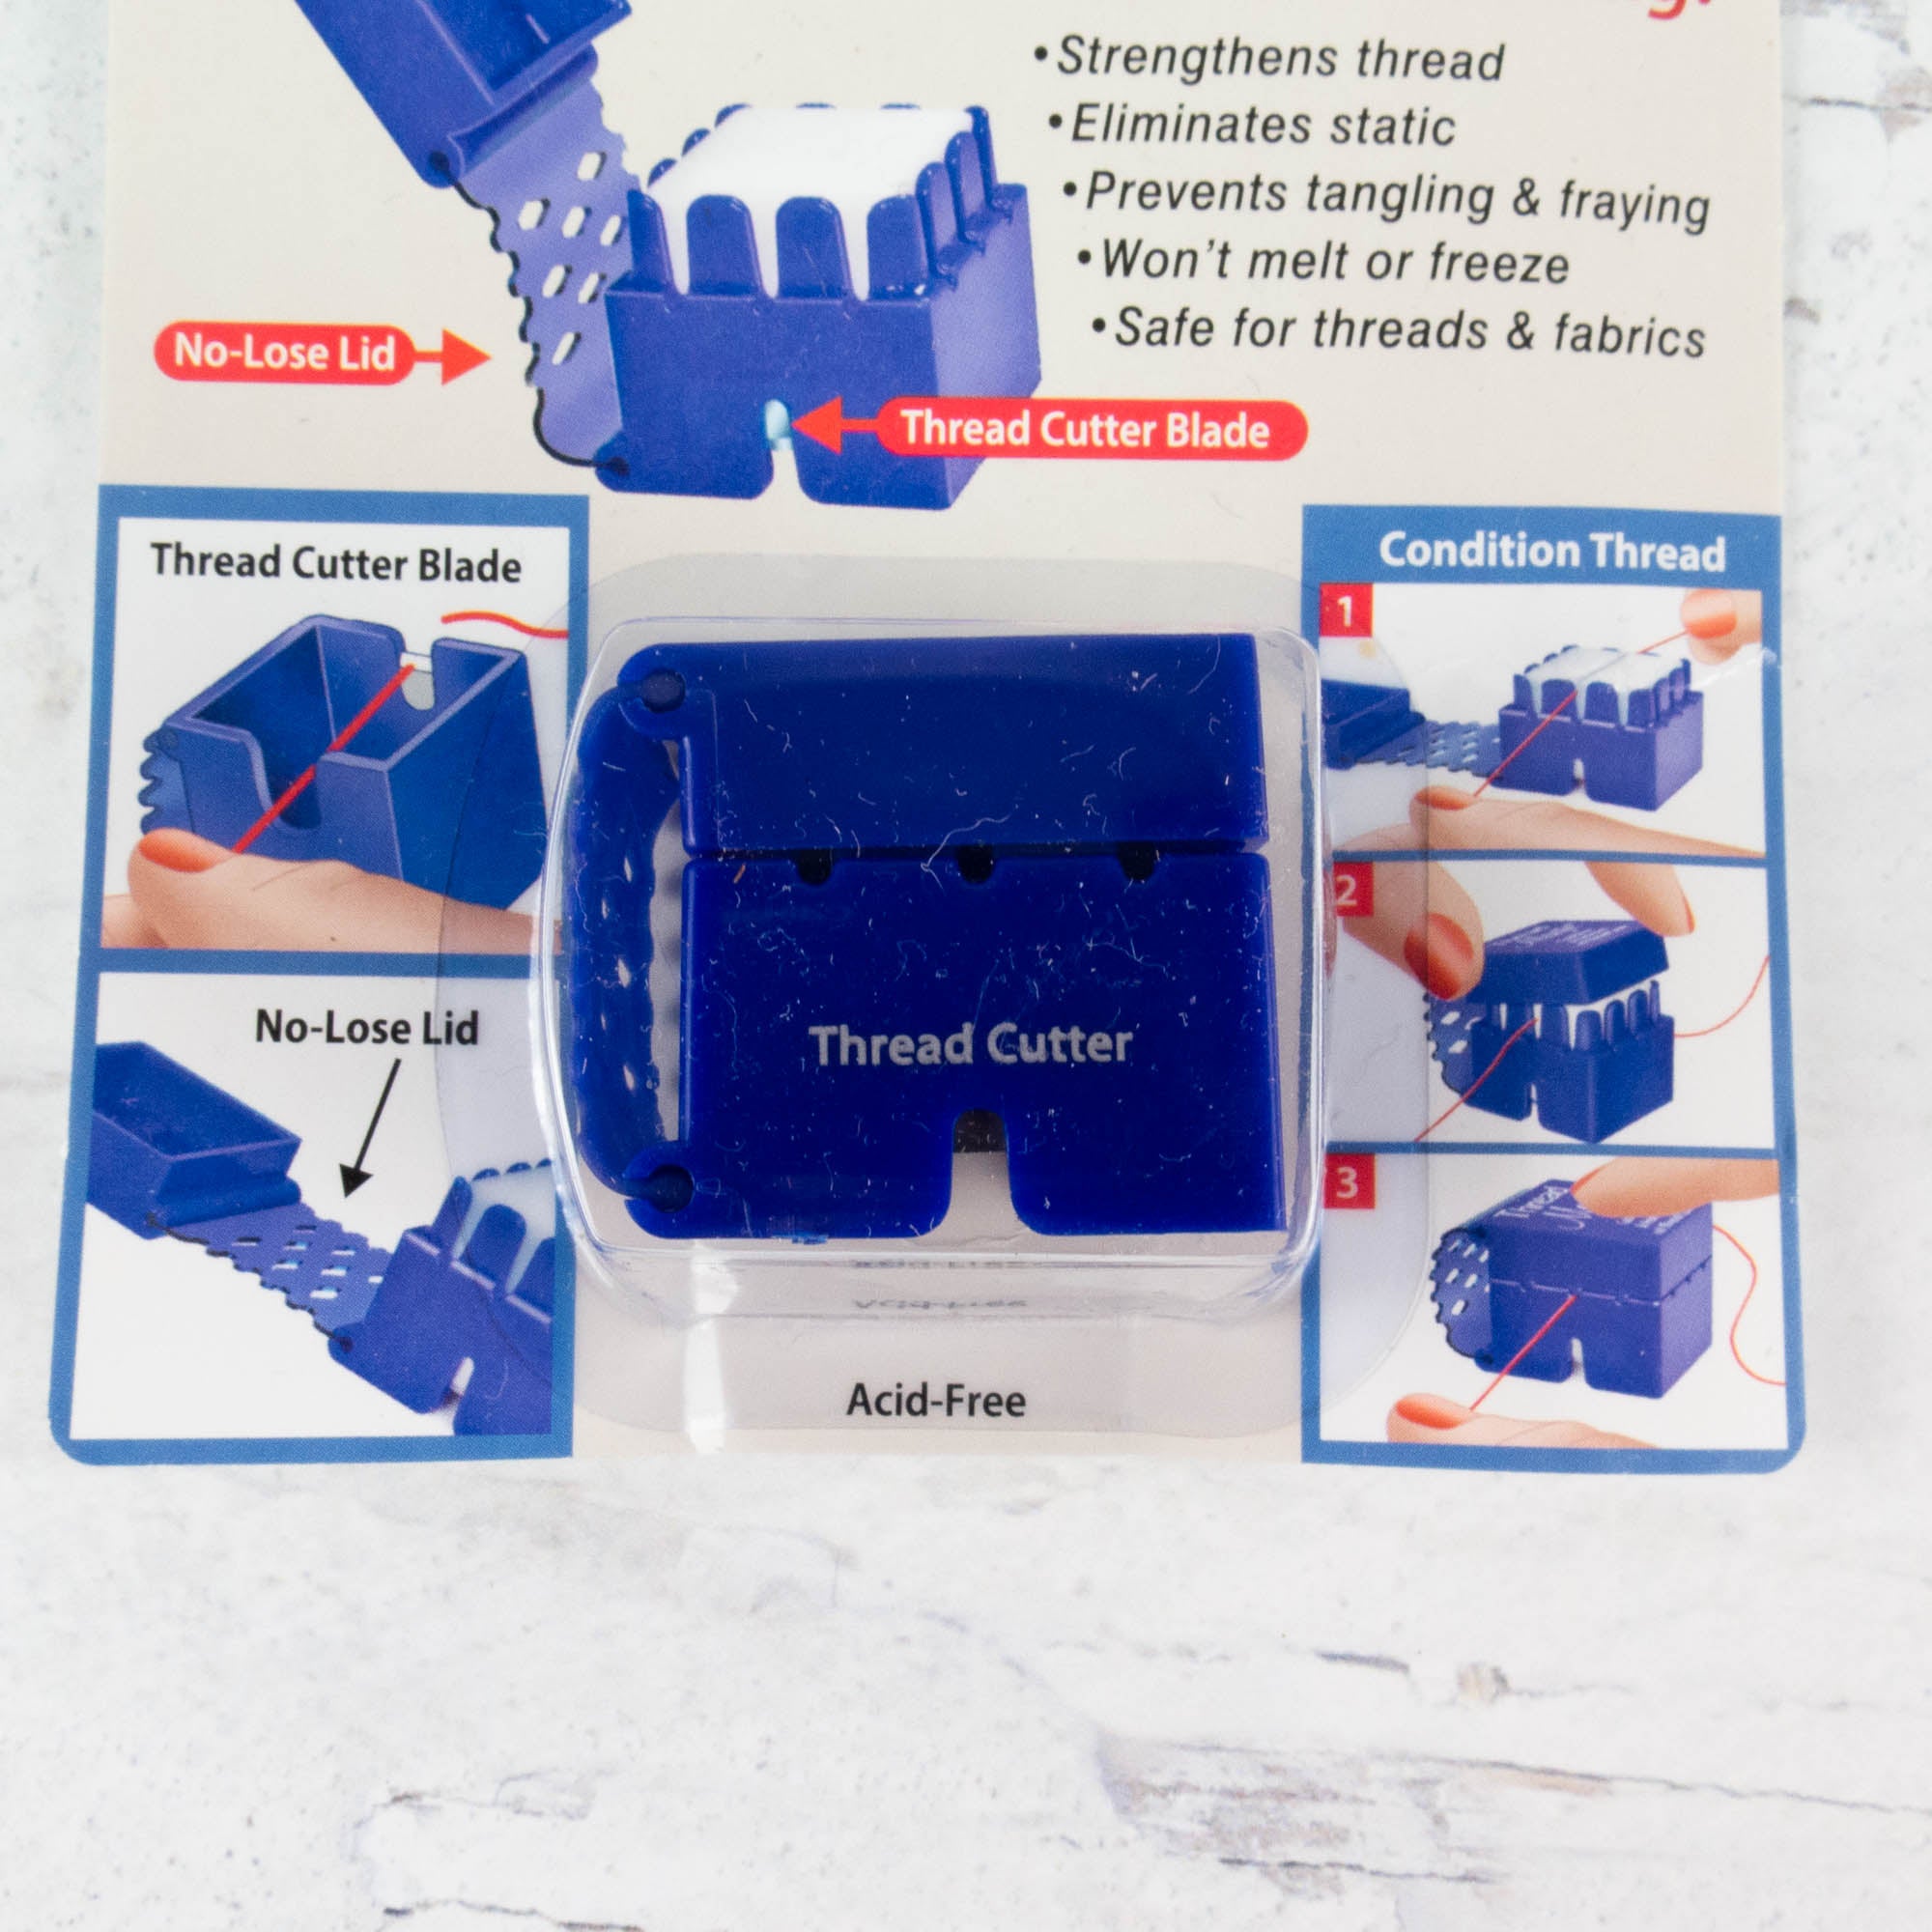 Thread Magic Thread Conditioner Cube with Thread Cutter – Snuggly